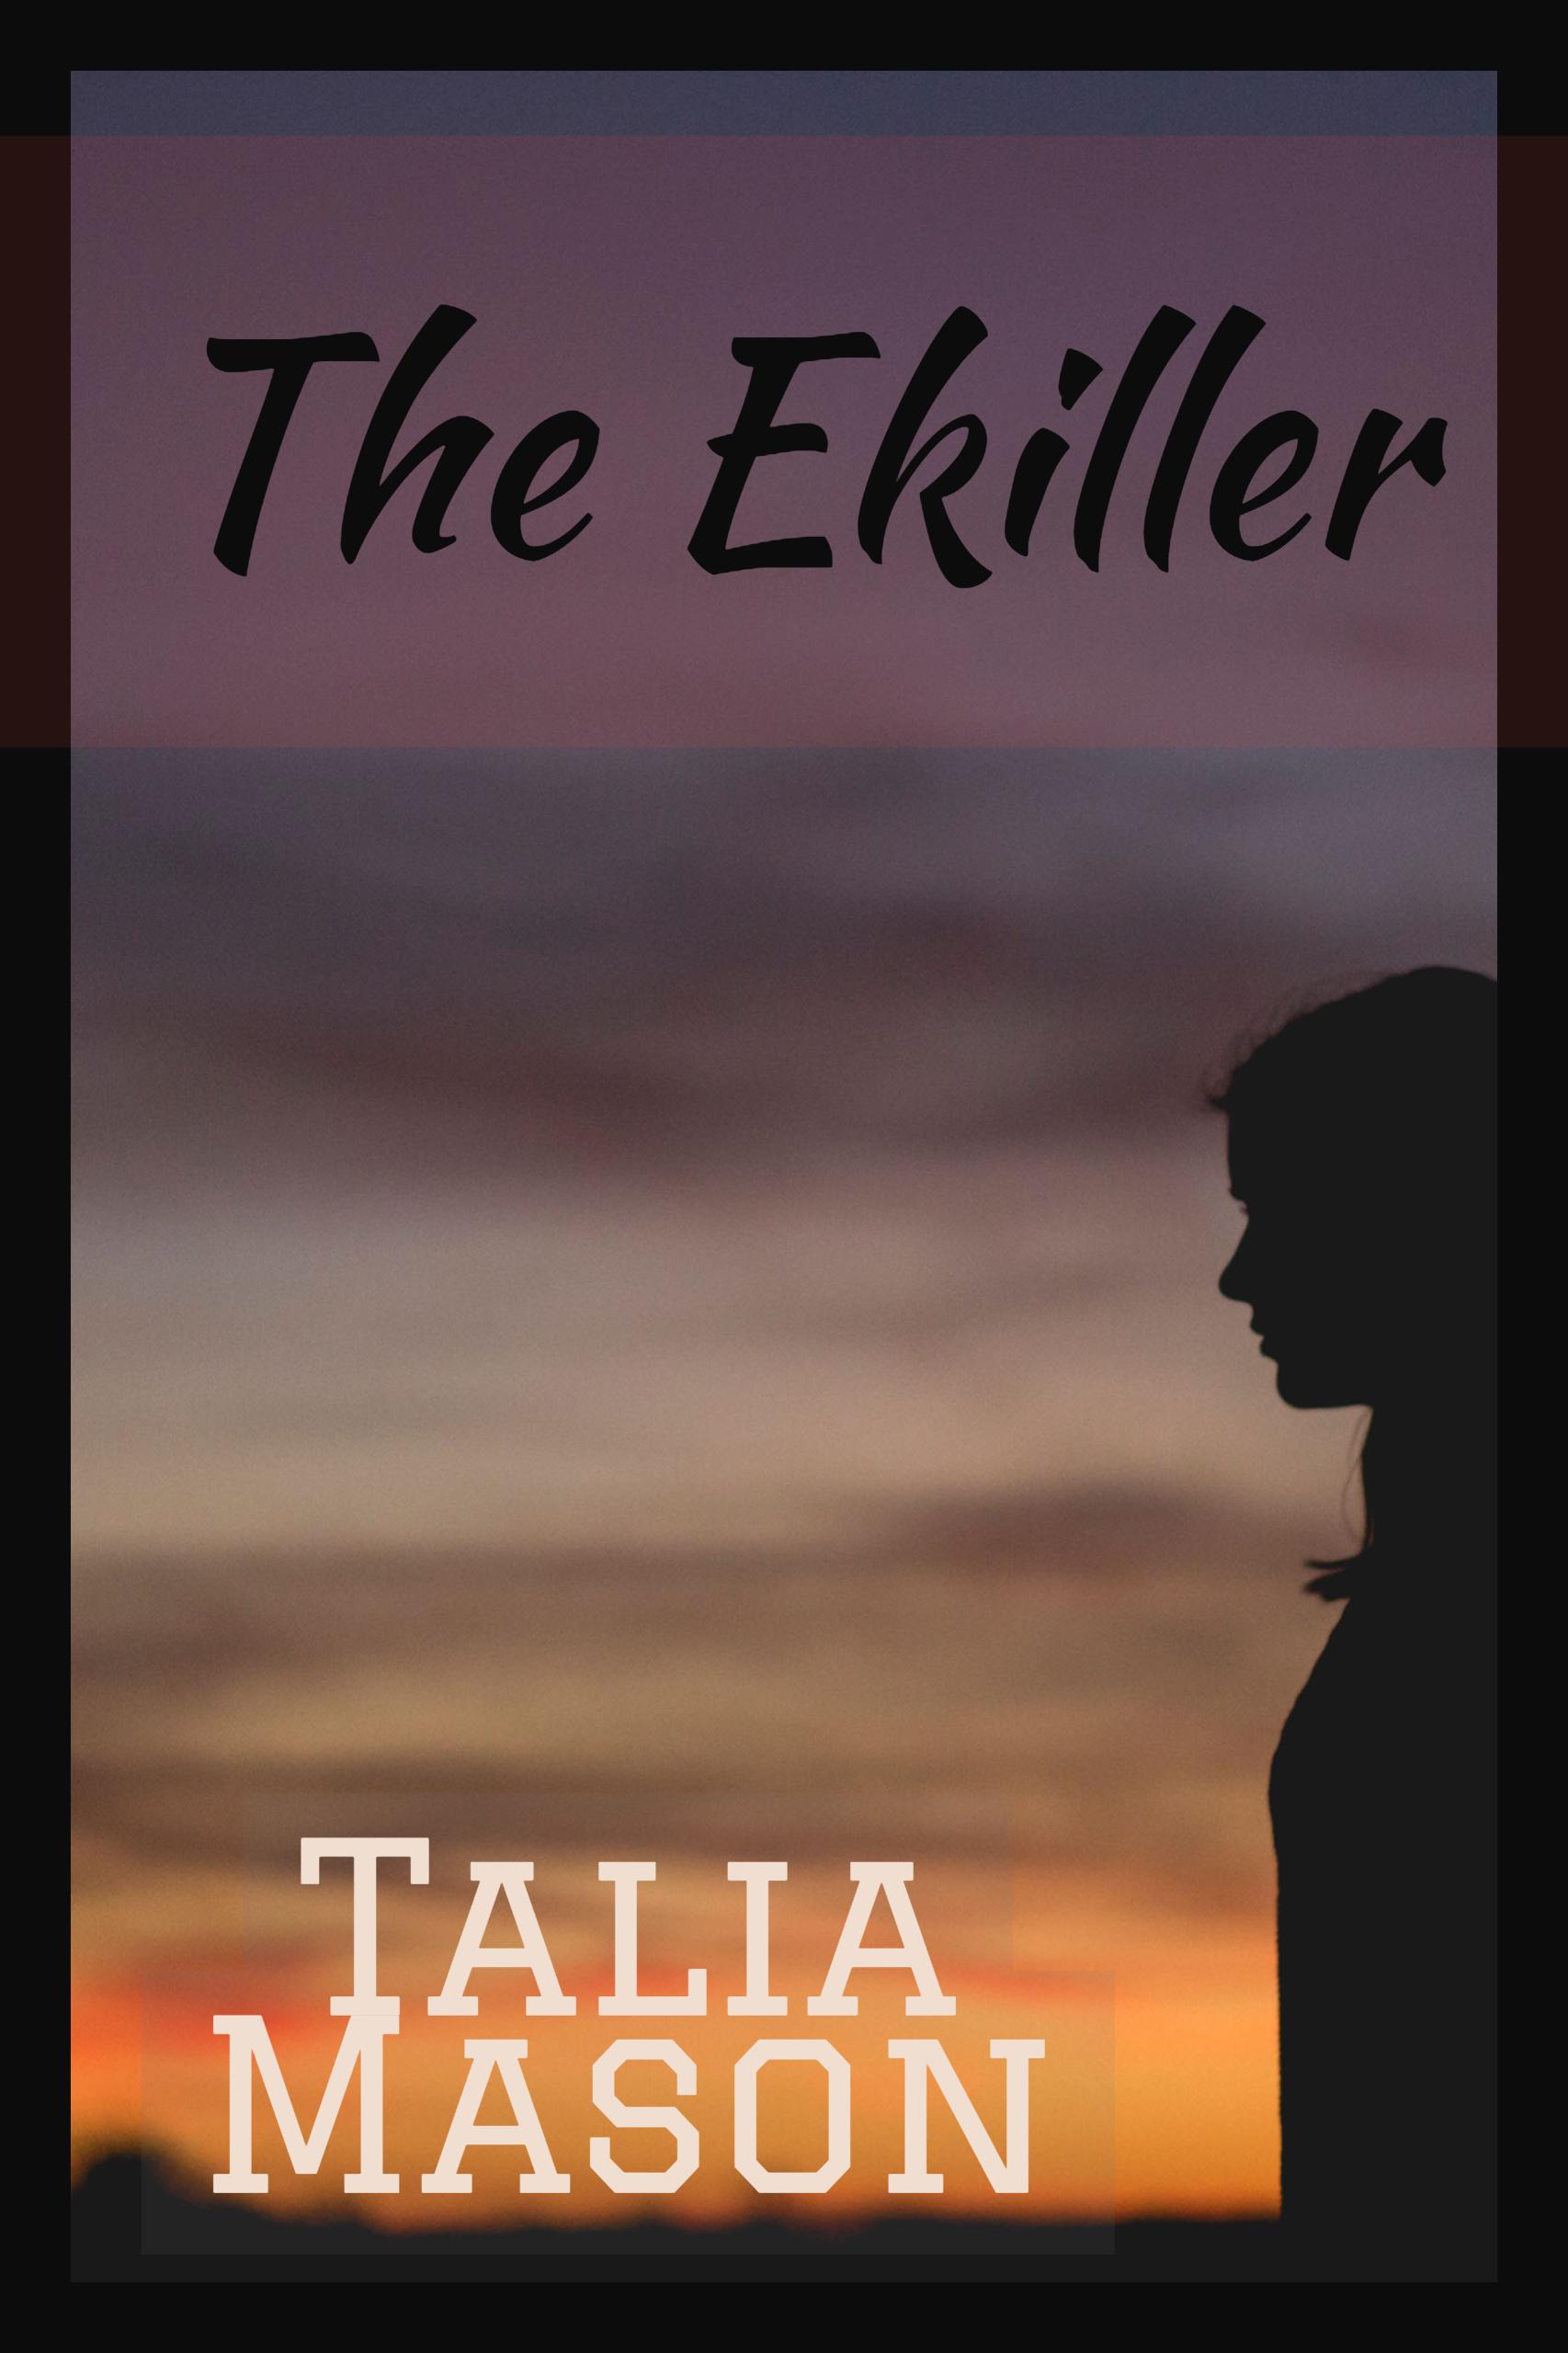 FREE: The E Killer by Talia mason